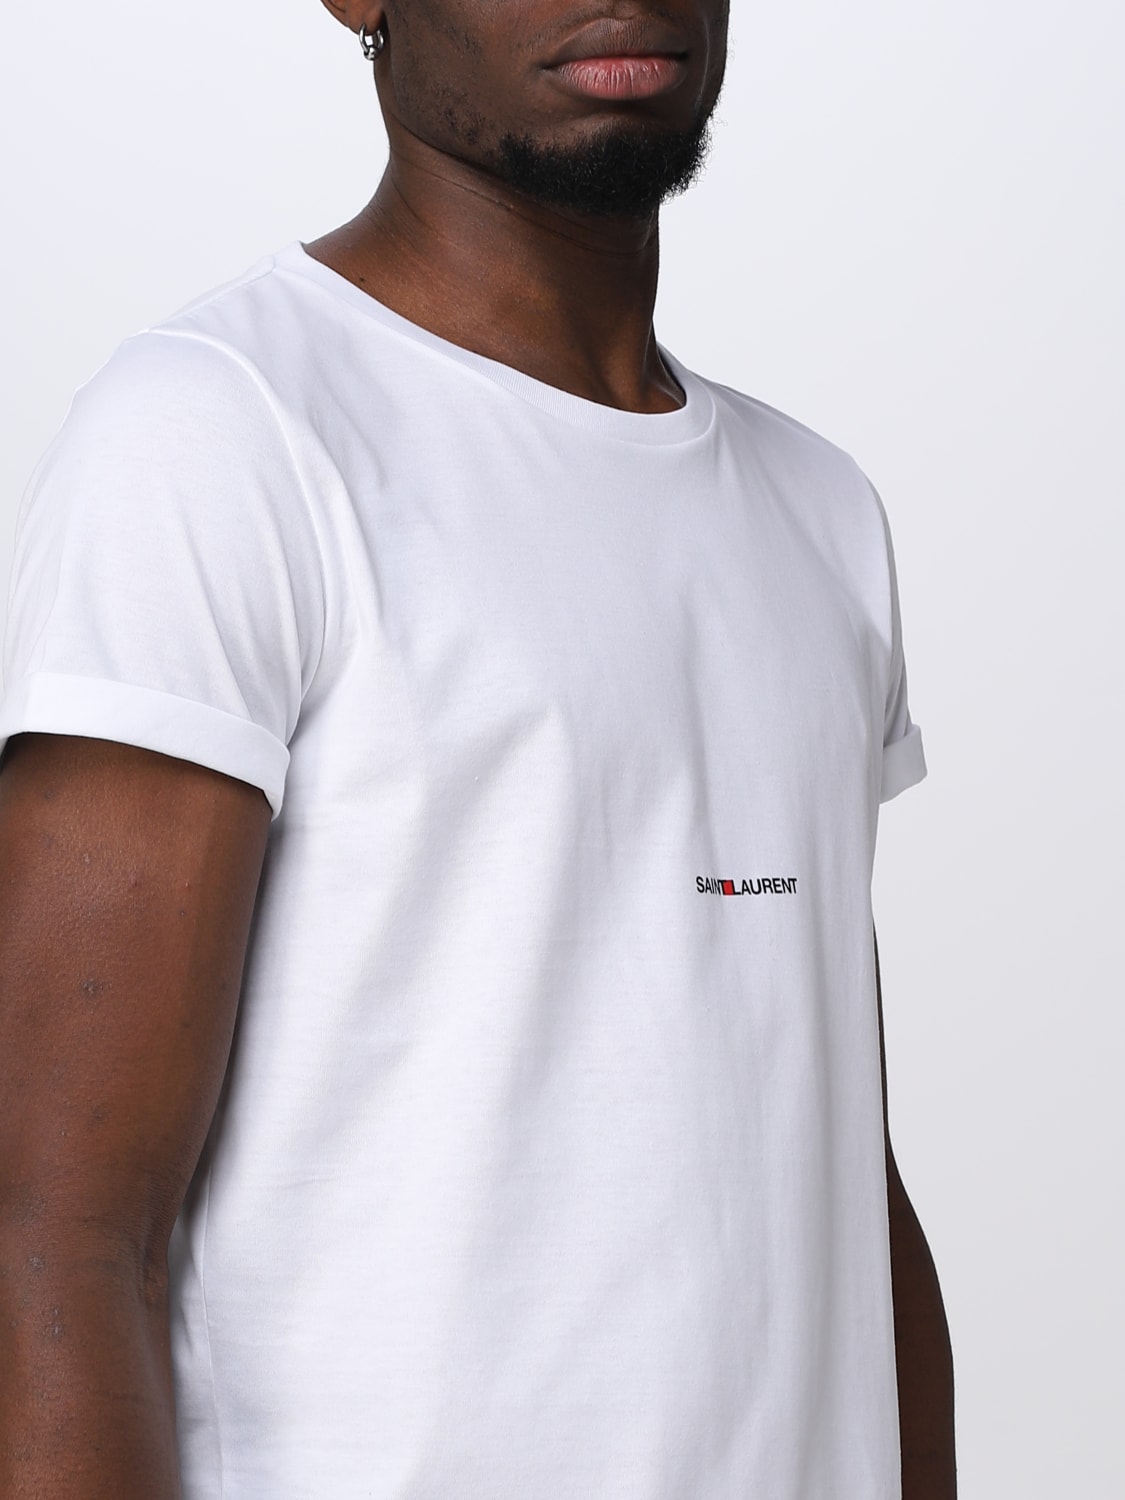 Saint Laurent(サンローラン) ロゴTシャツ